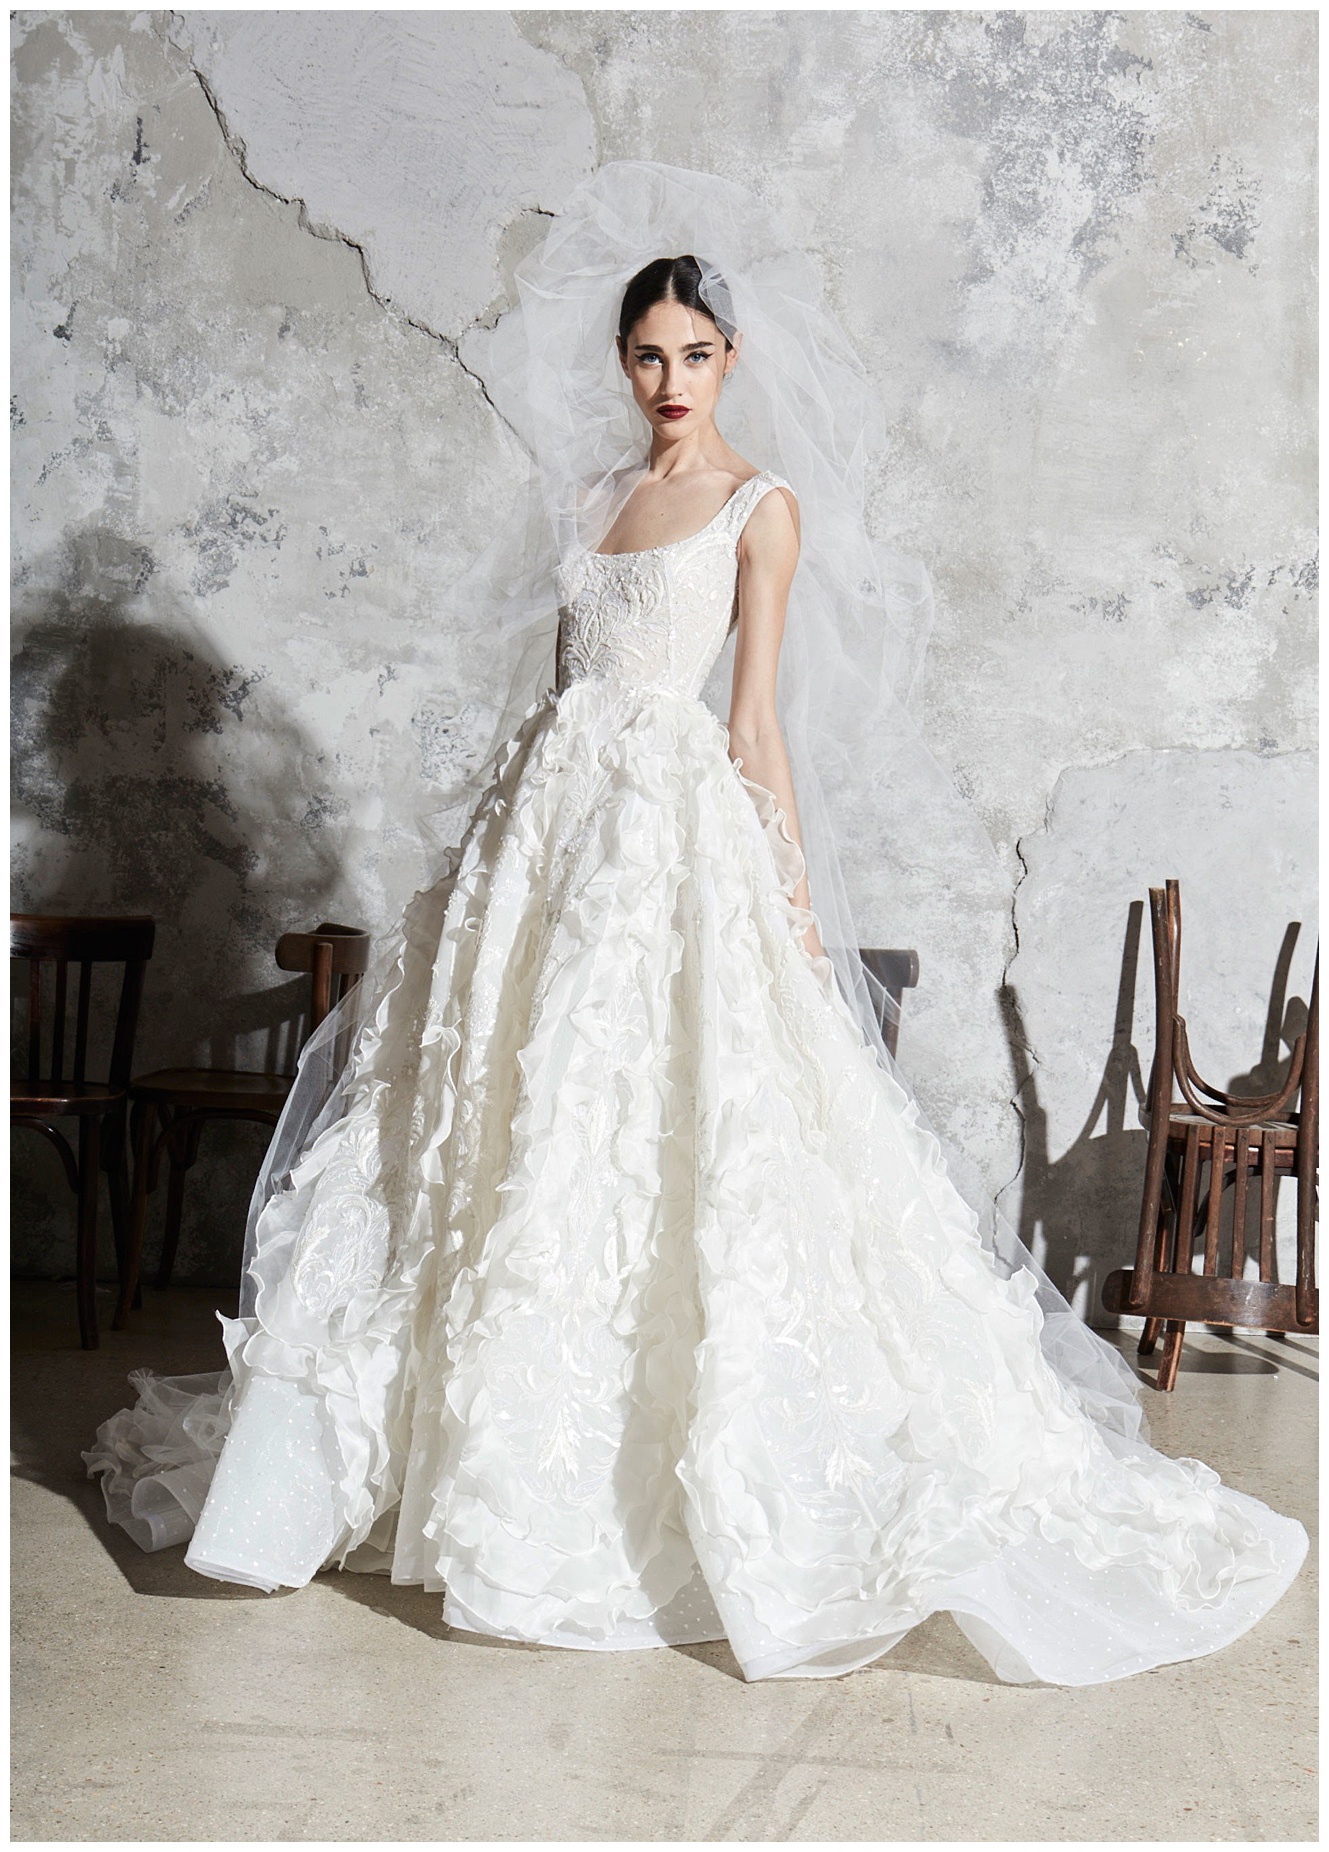 buy zuhair murad wedding dress